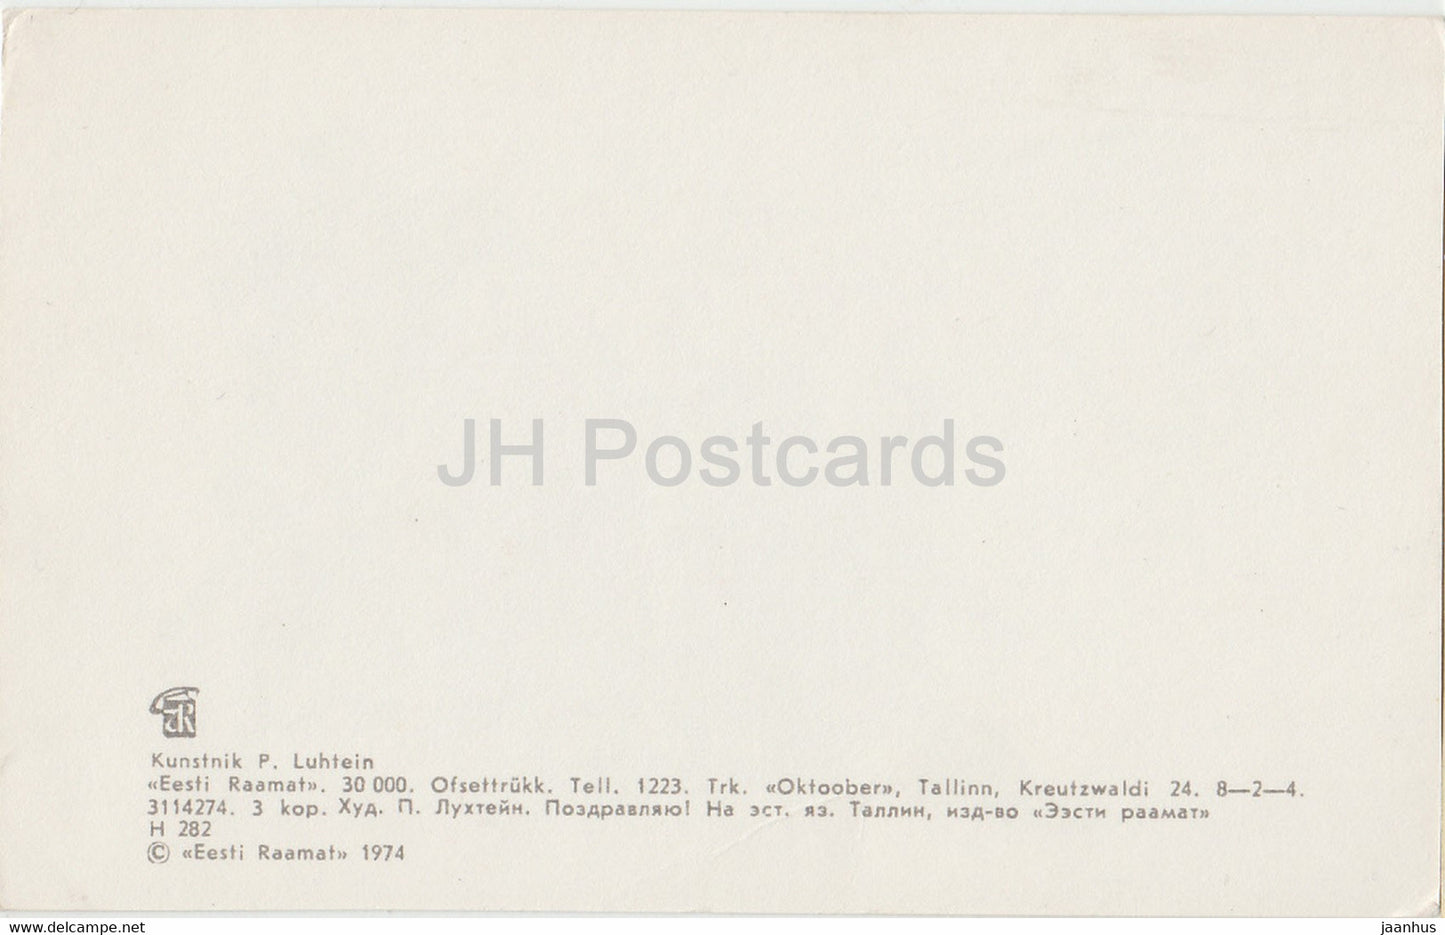 Bithday greeting Card by P. Luhtein - flowers - 1974 - Estonia USSR - unused